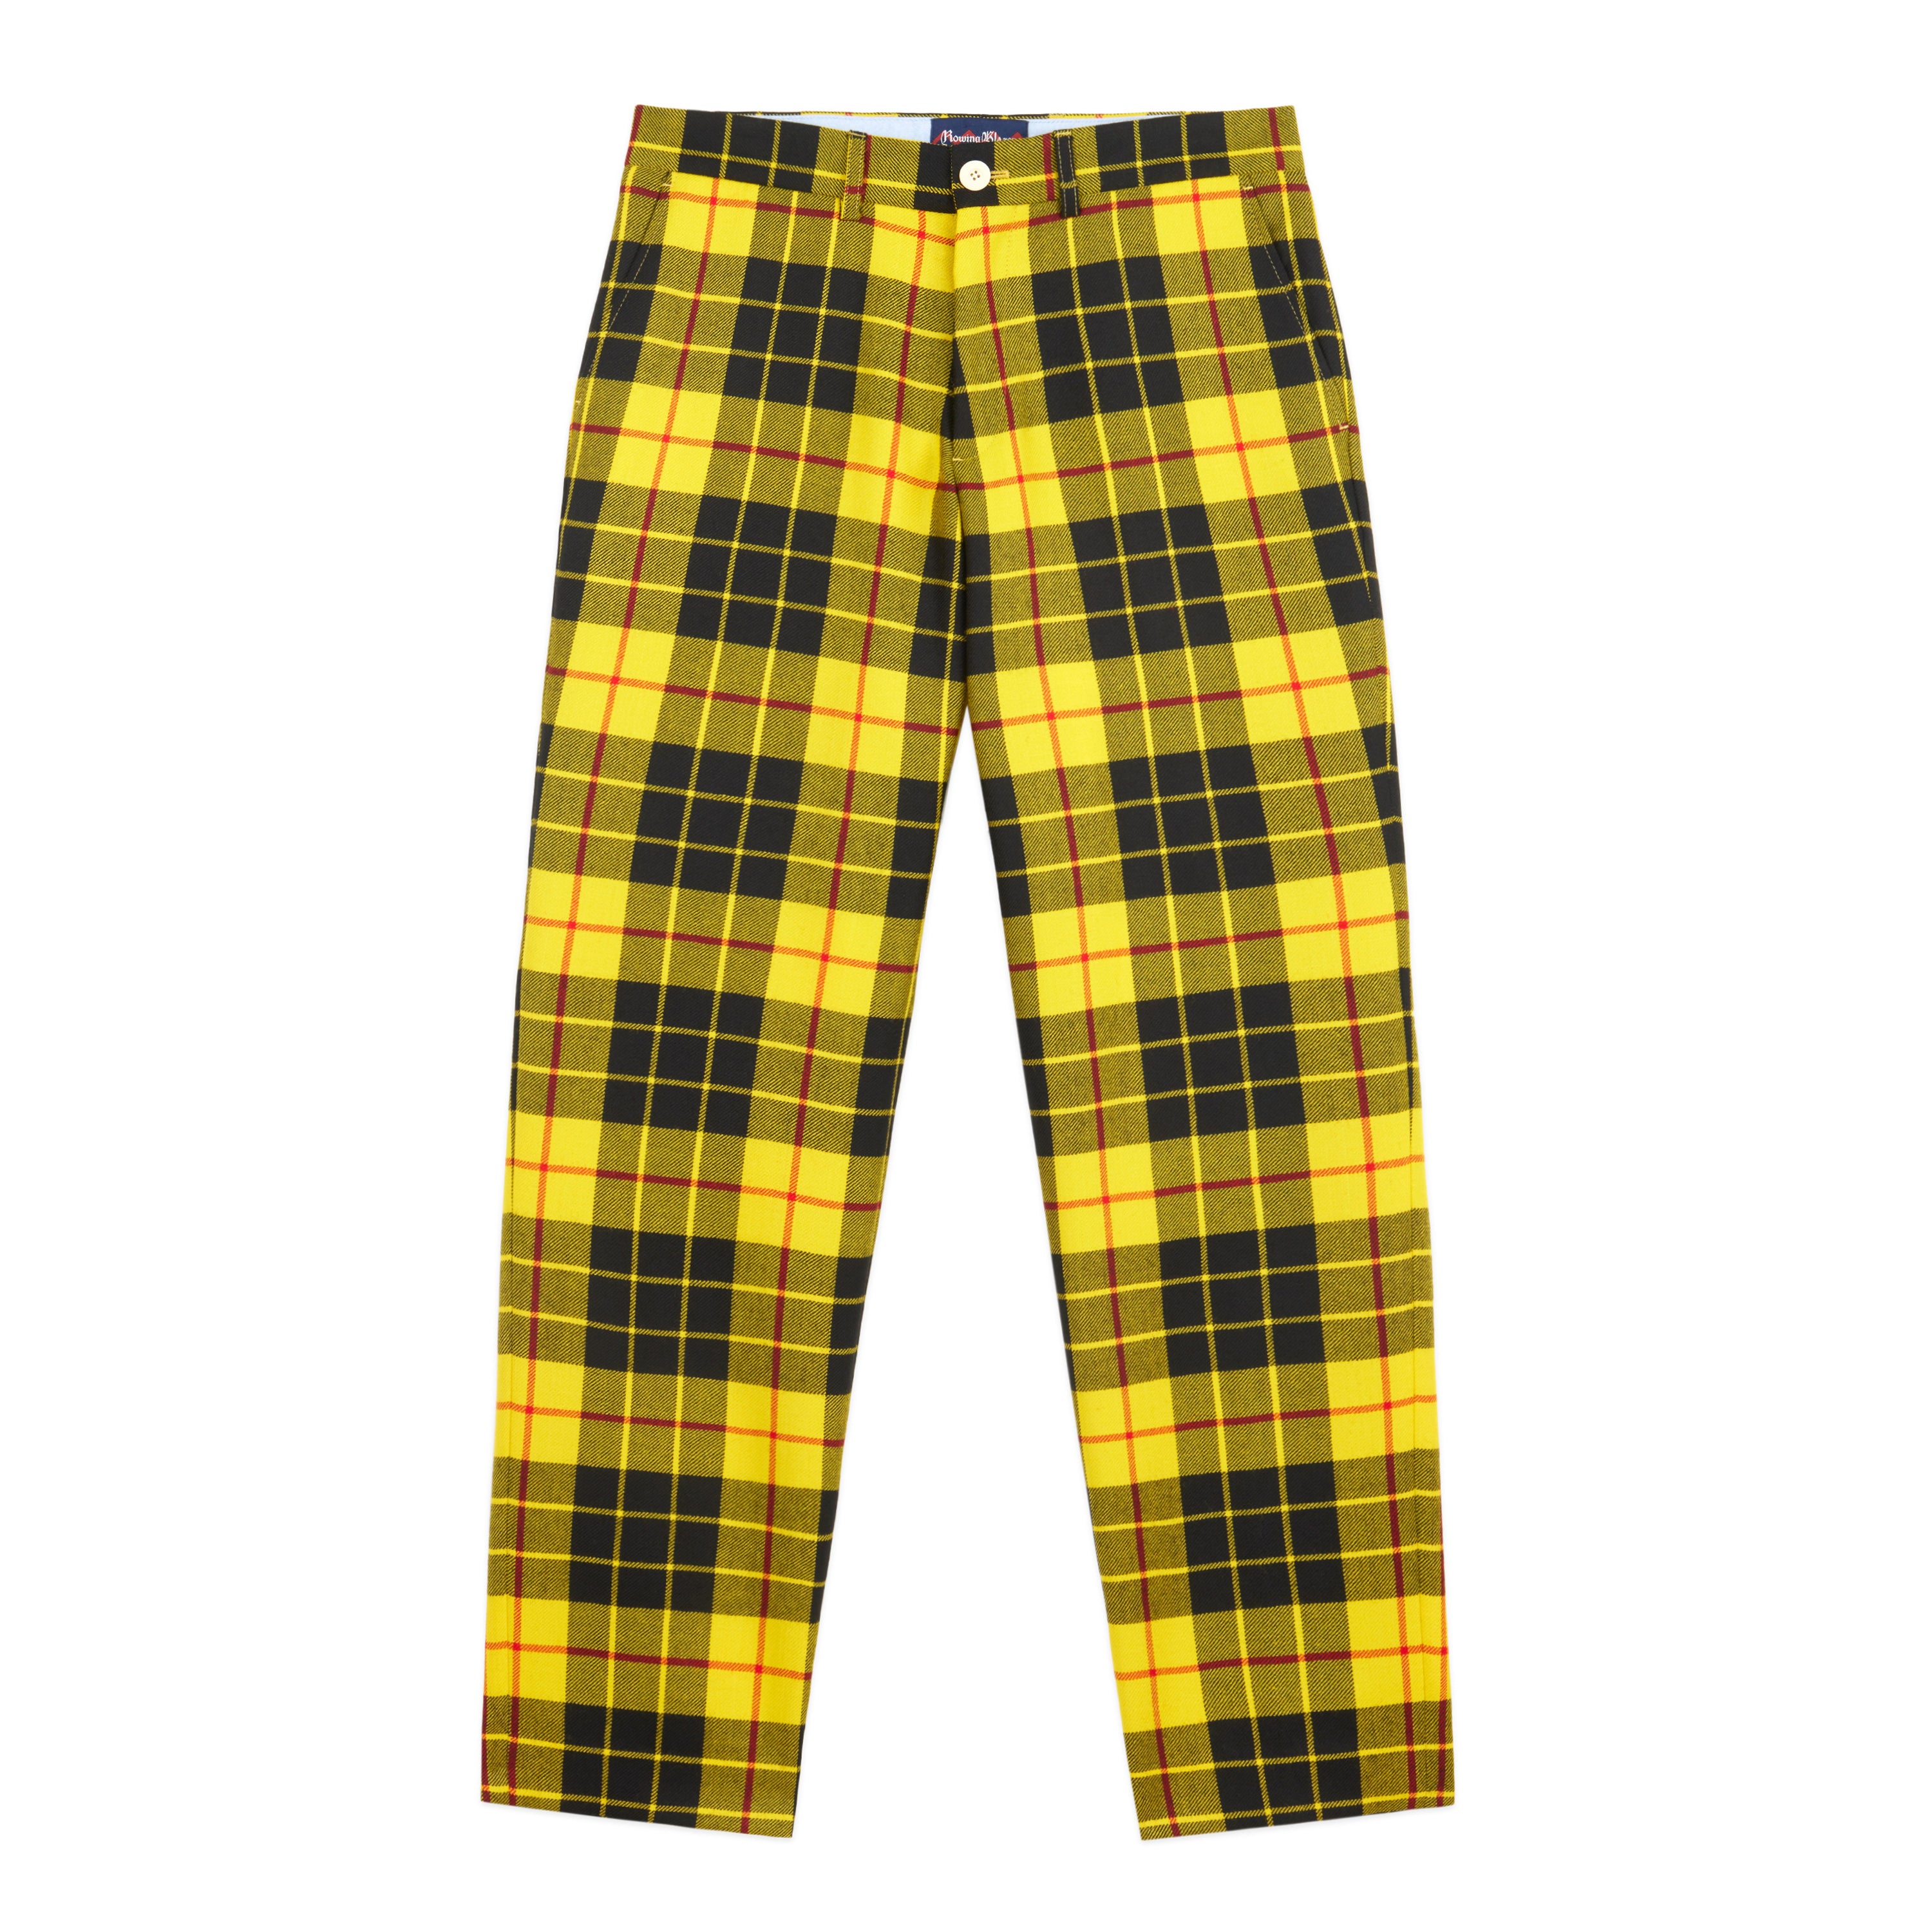 Tartan Grunge Cuffed Pants  Limited